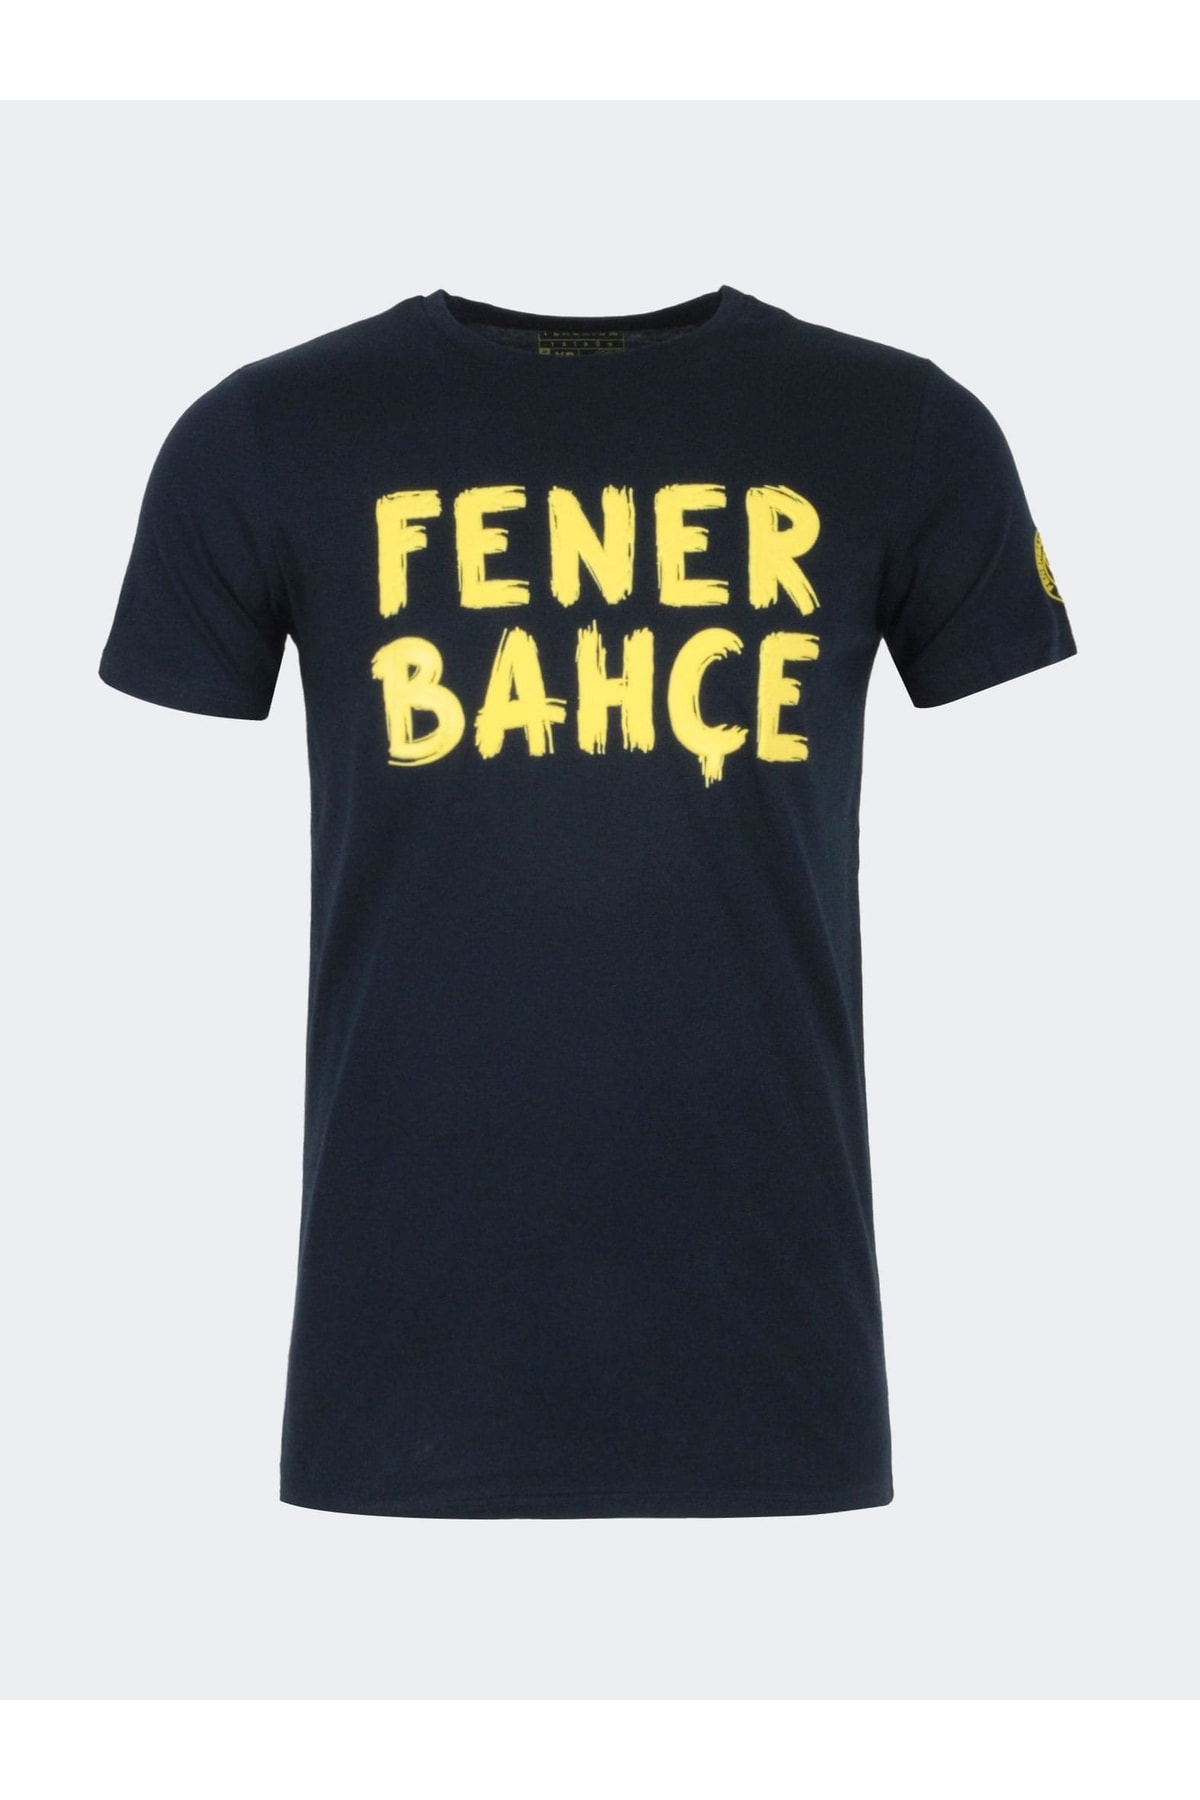 Fenerbahçe Erkek Tribün Baskı T-shirt